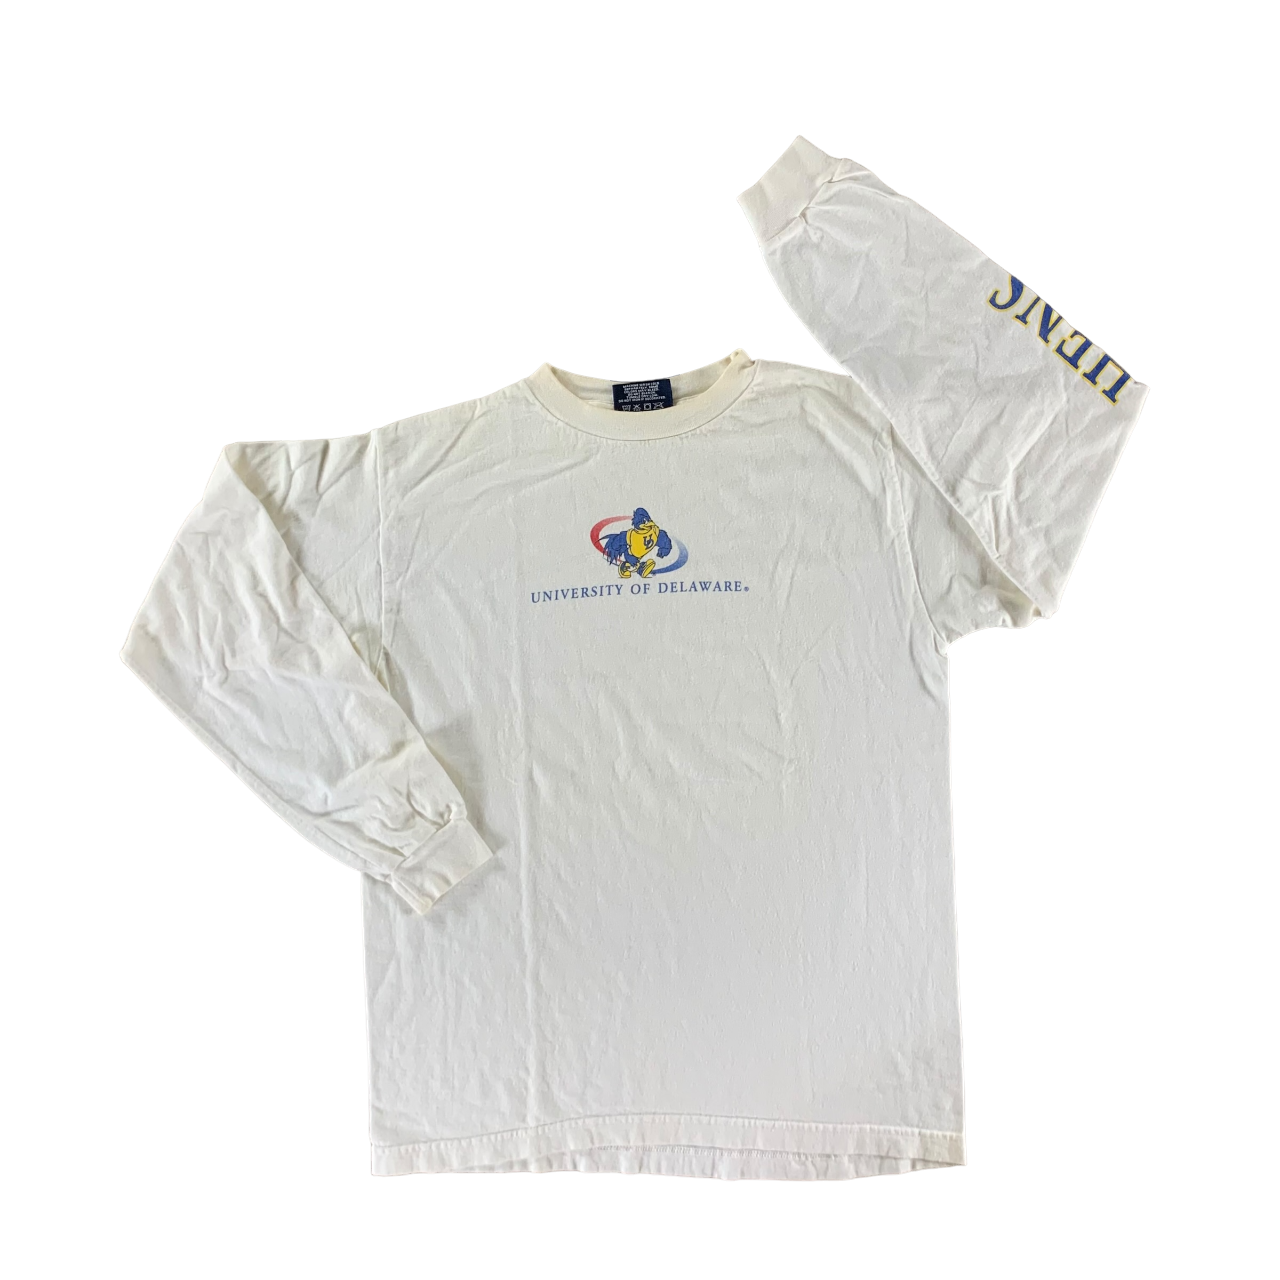 Vintage 1990s University of Delaware T-shirt size XL